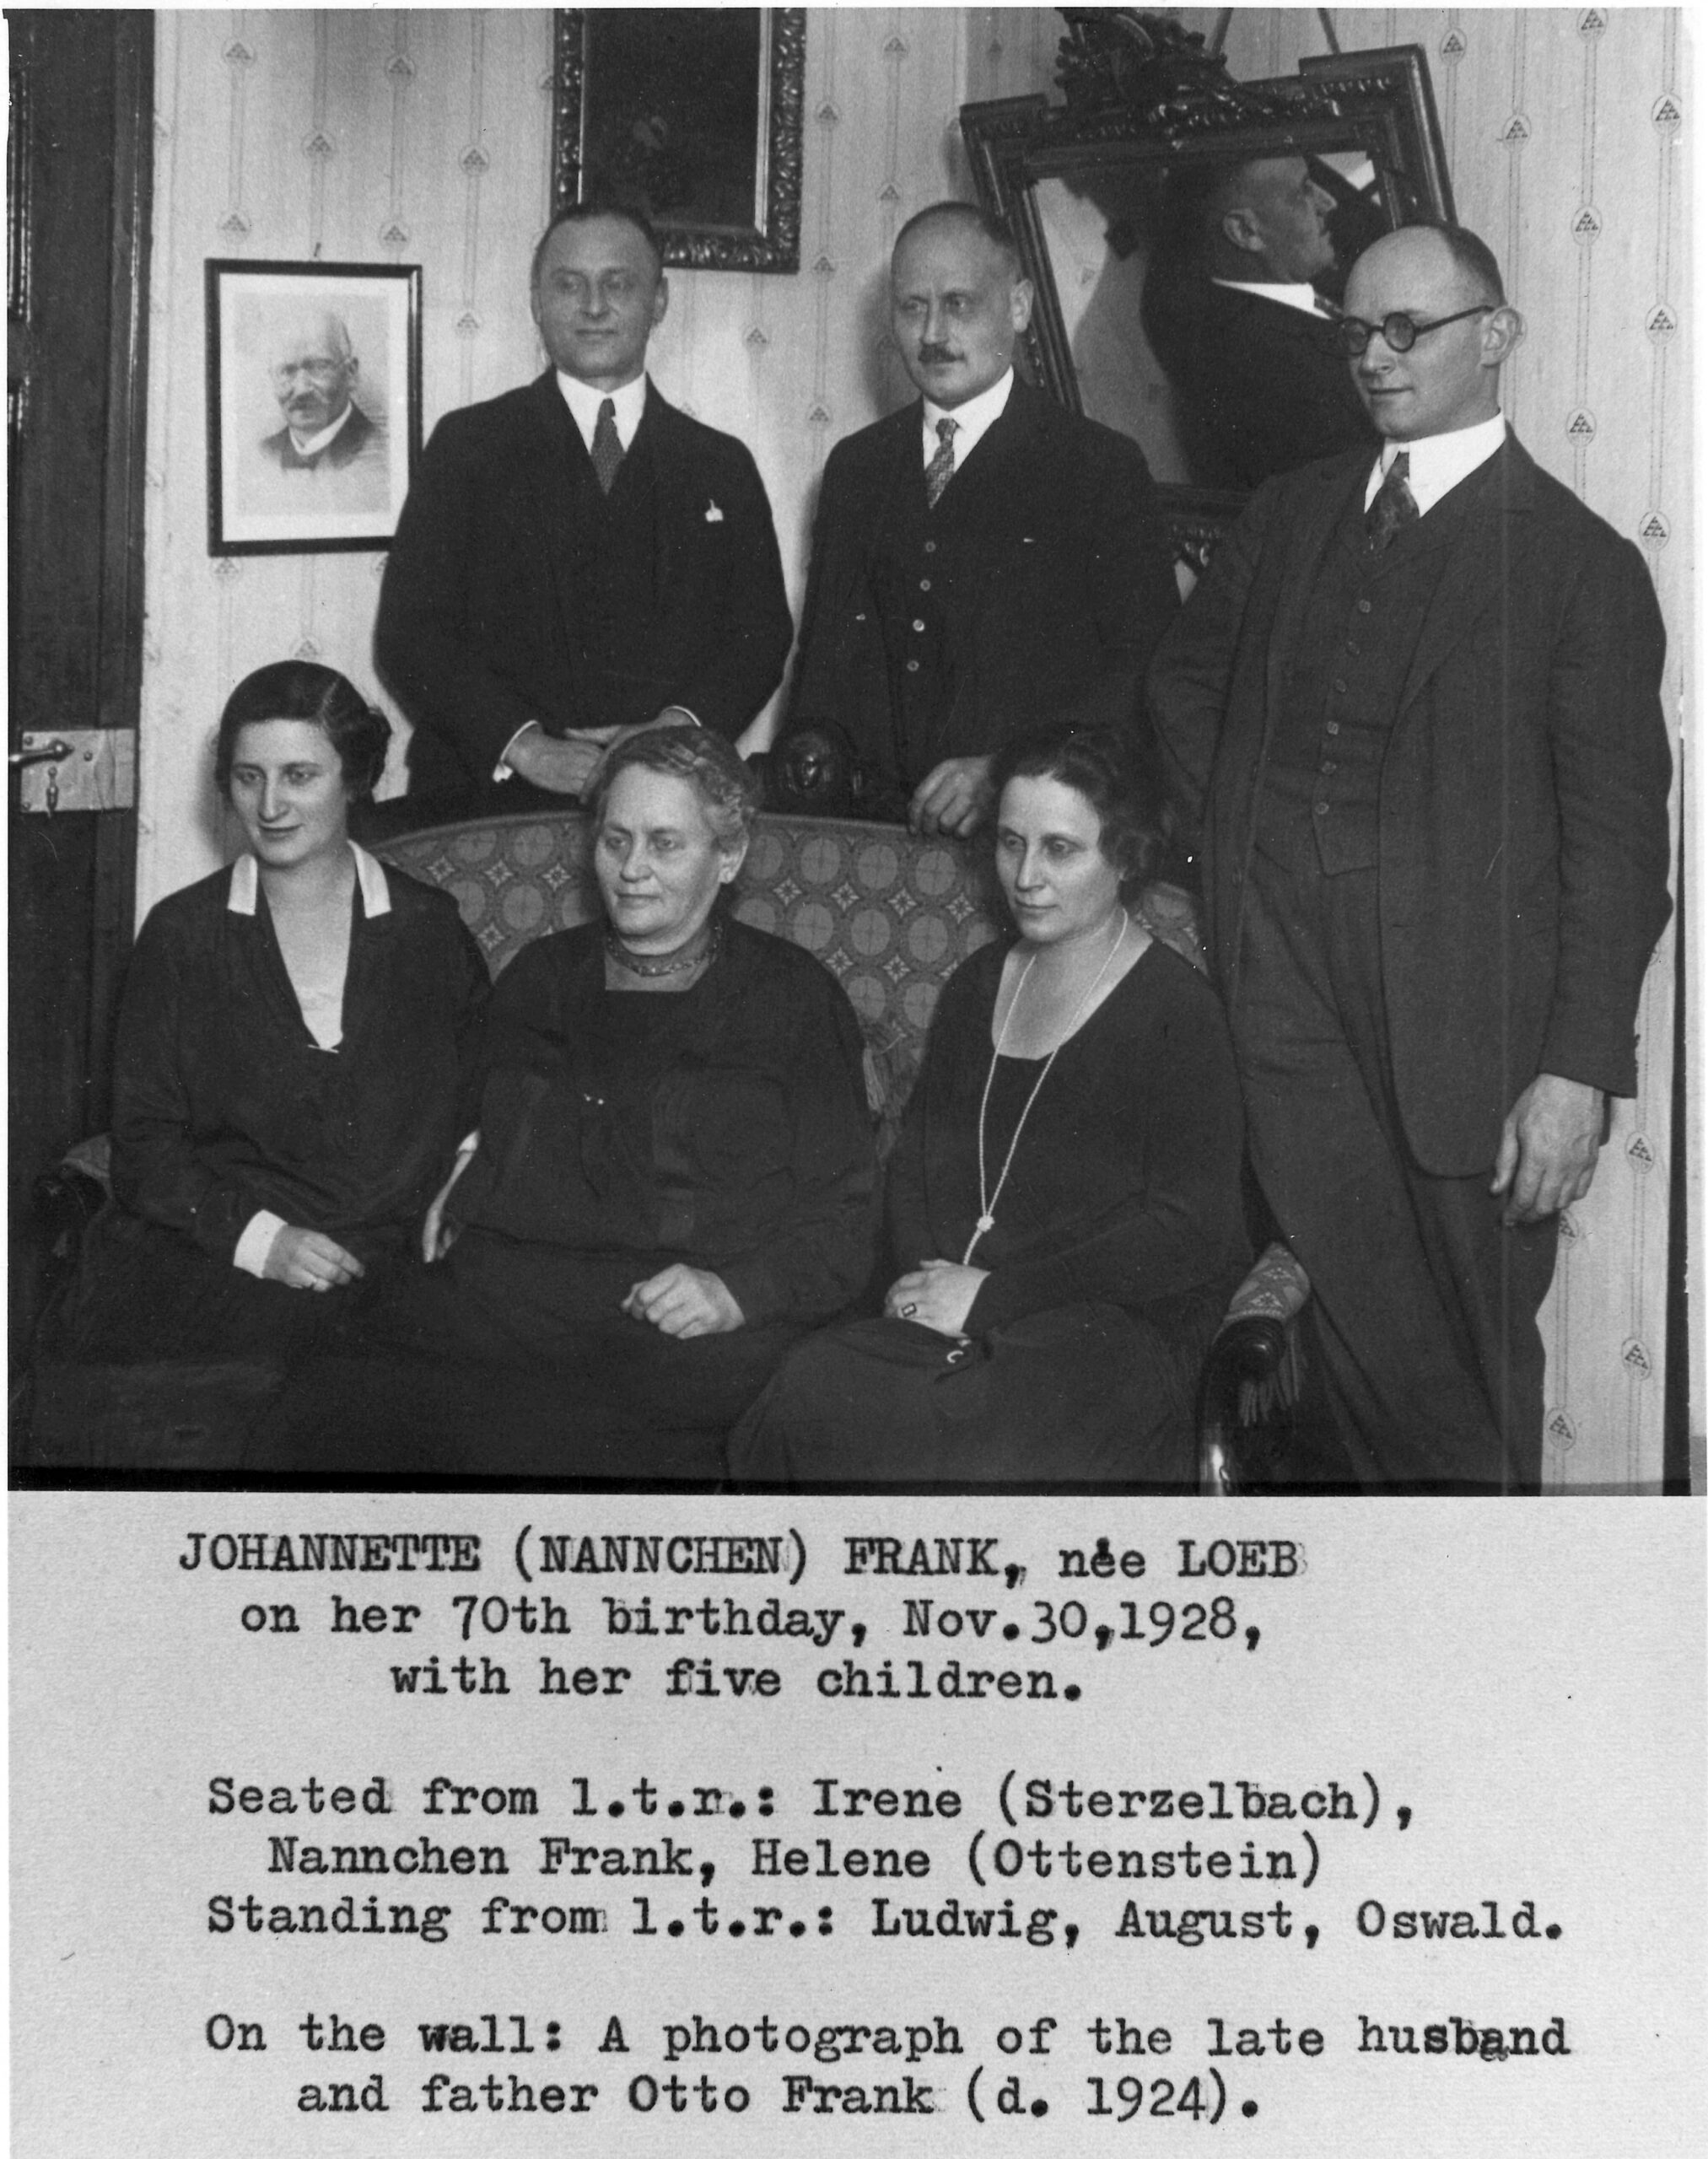 Johannette Frank with all 5 children 1928, copyright Norma Moruzzi